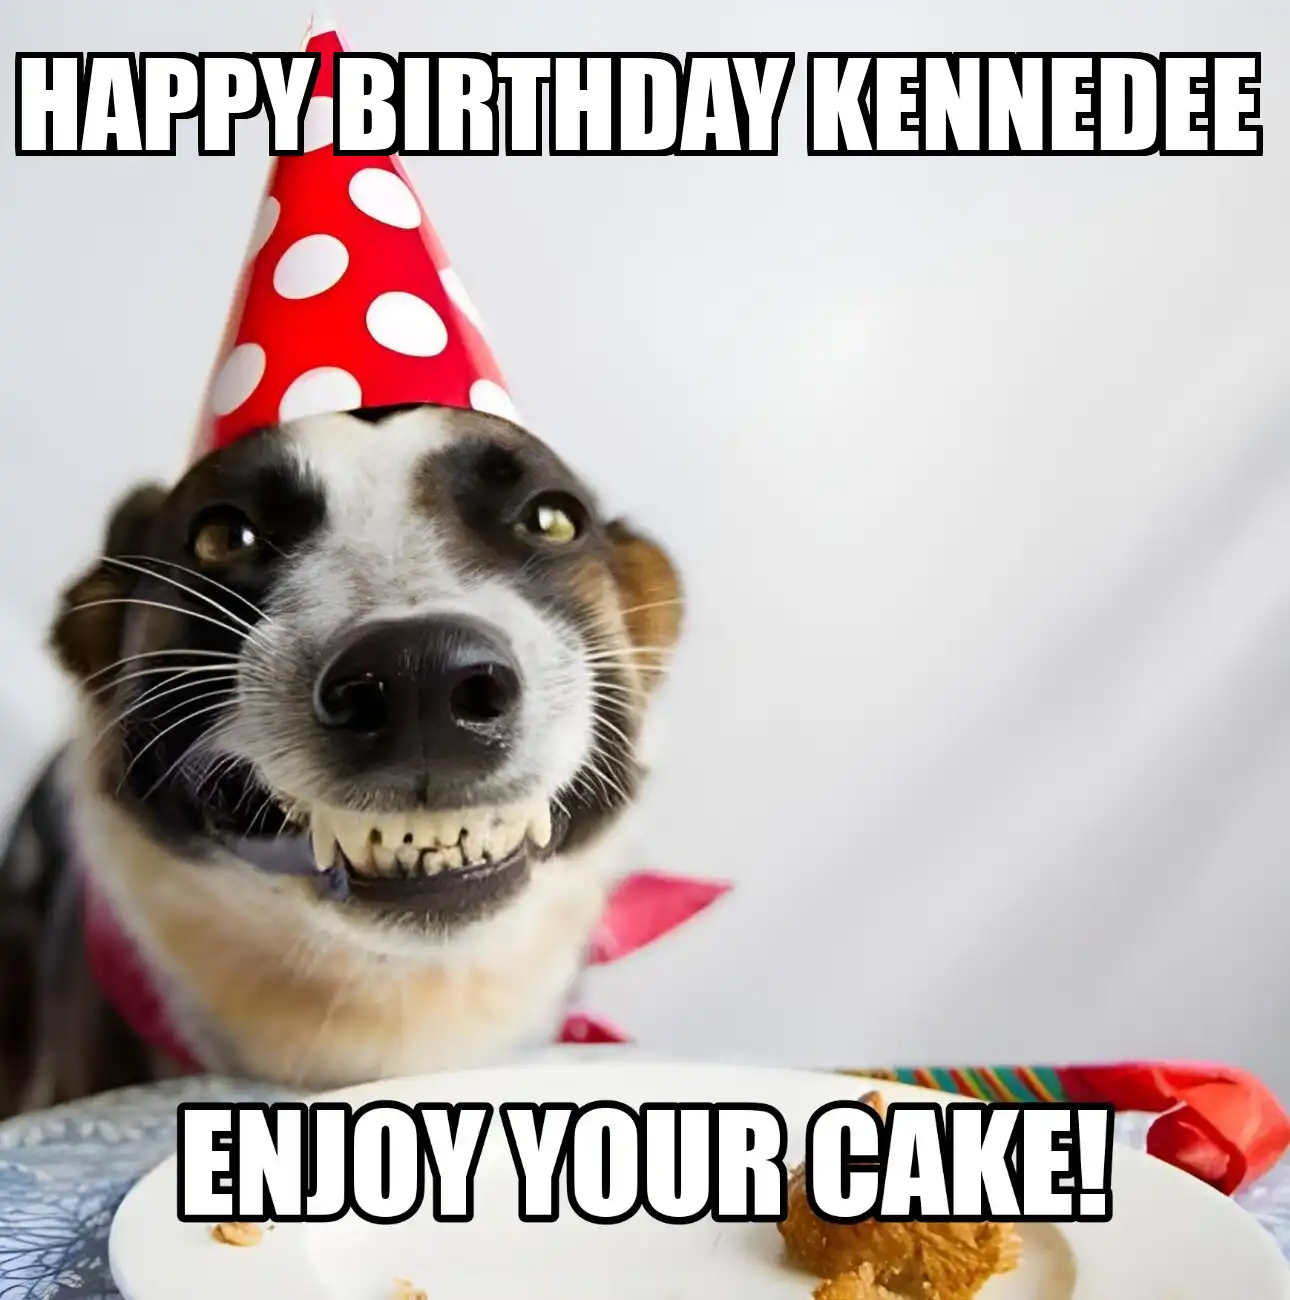 Happy Birthday Kennedee Enjoy Your Cake Dog Meme